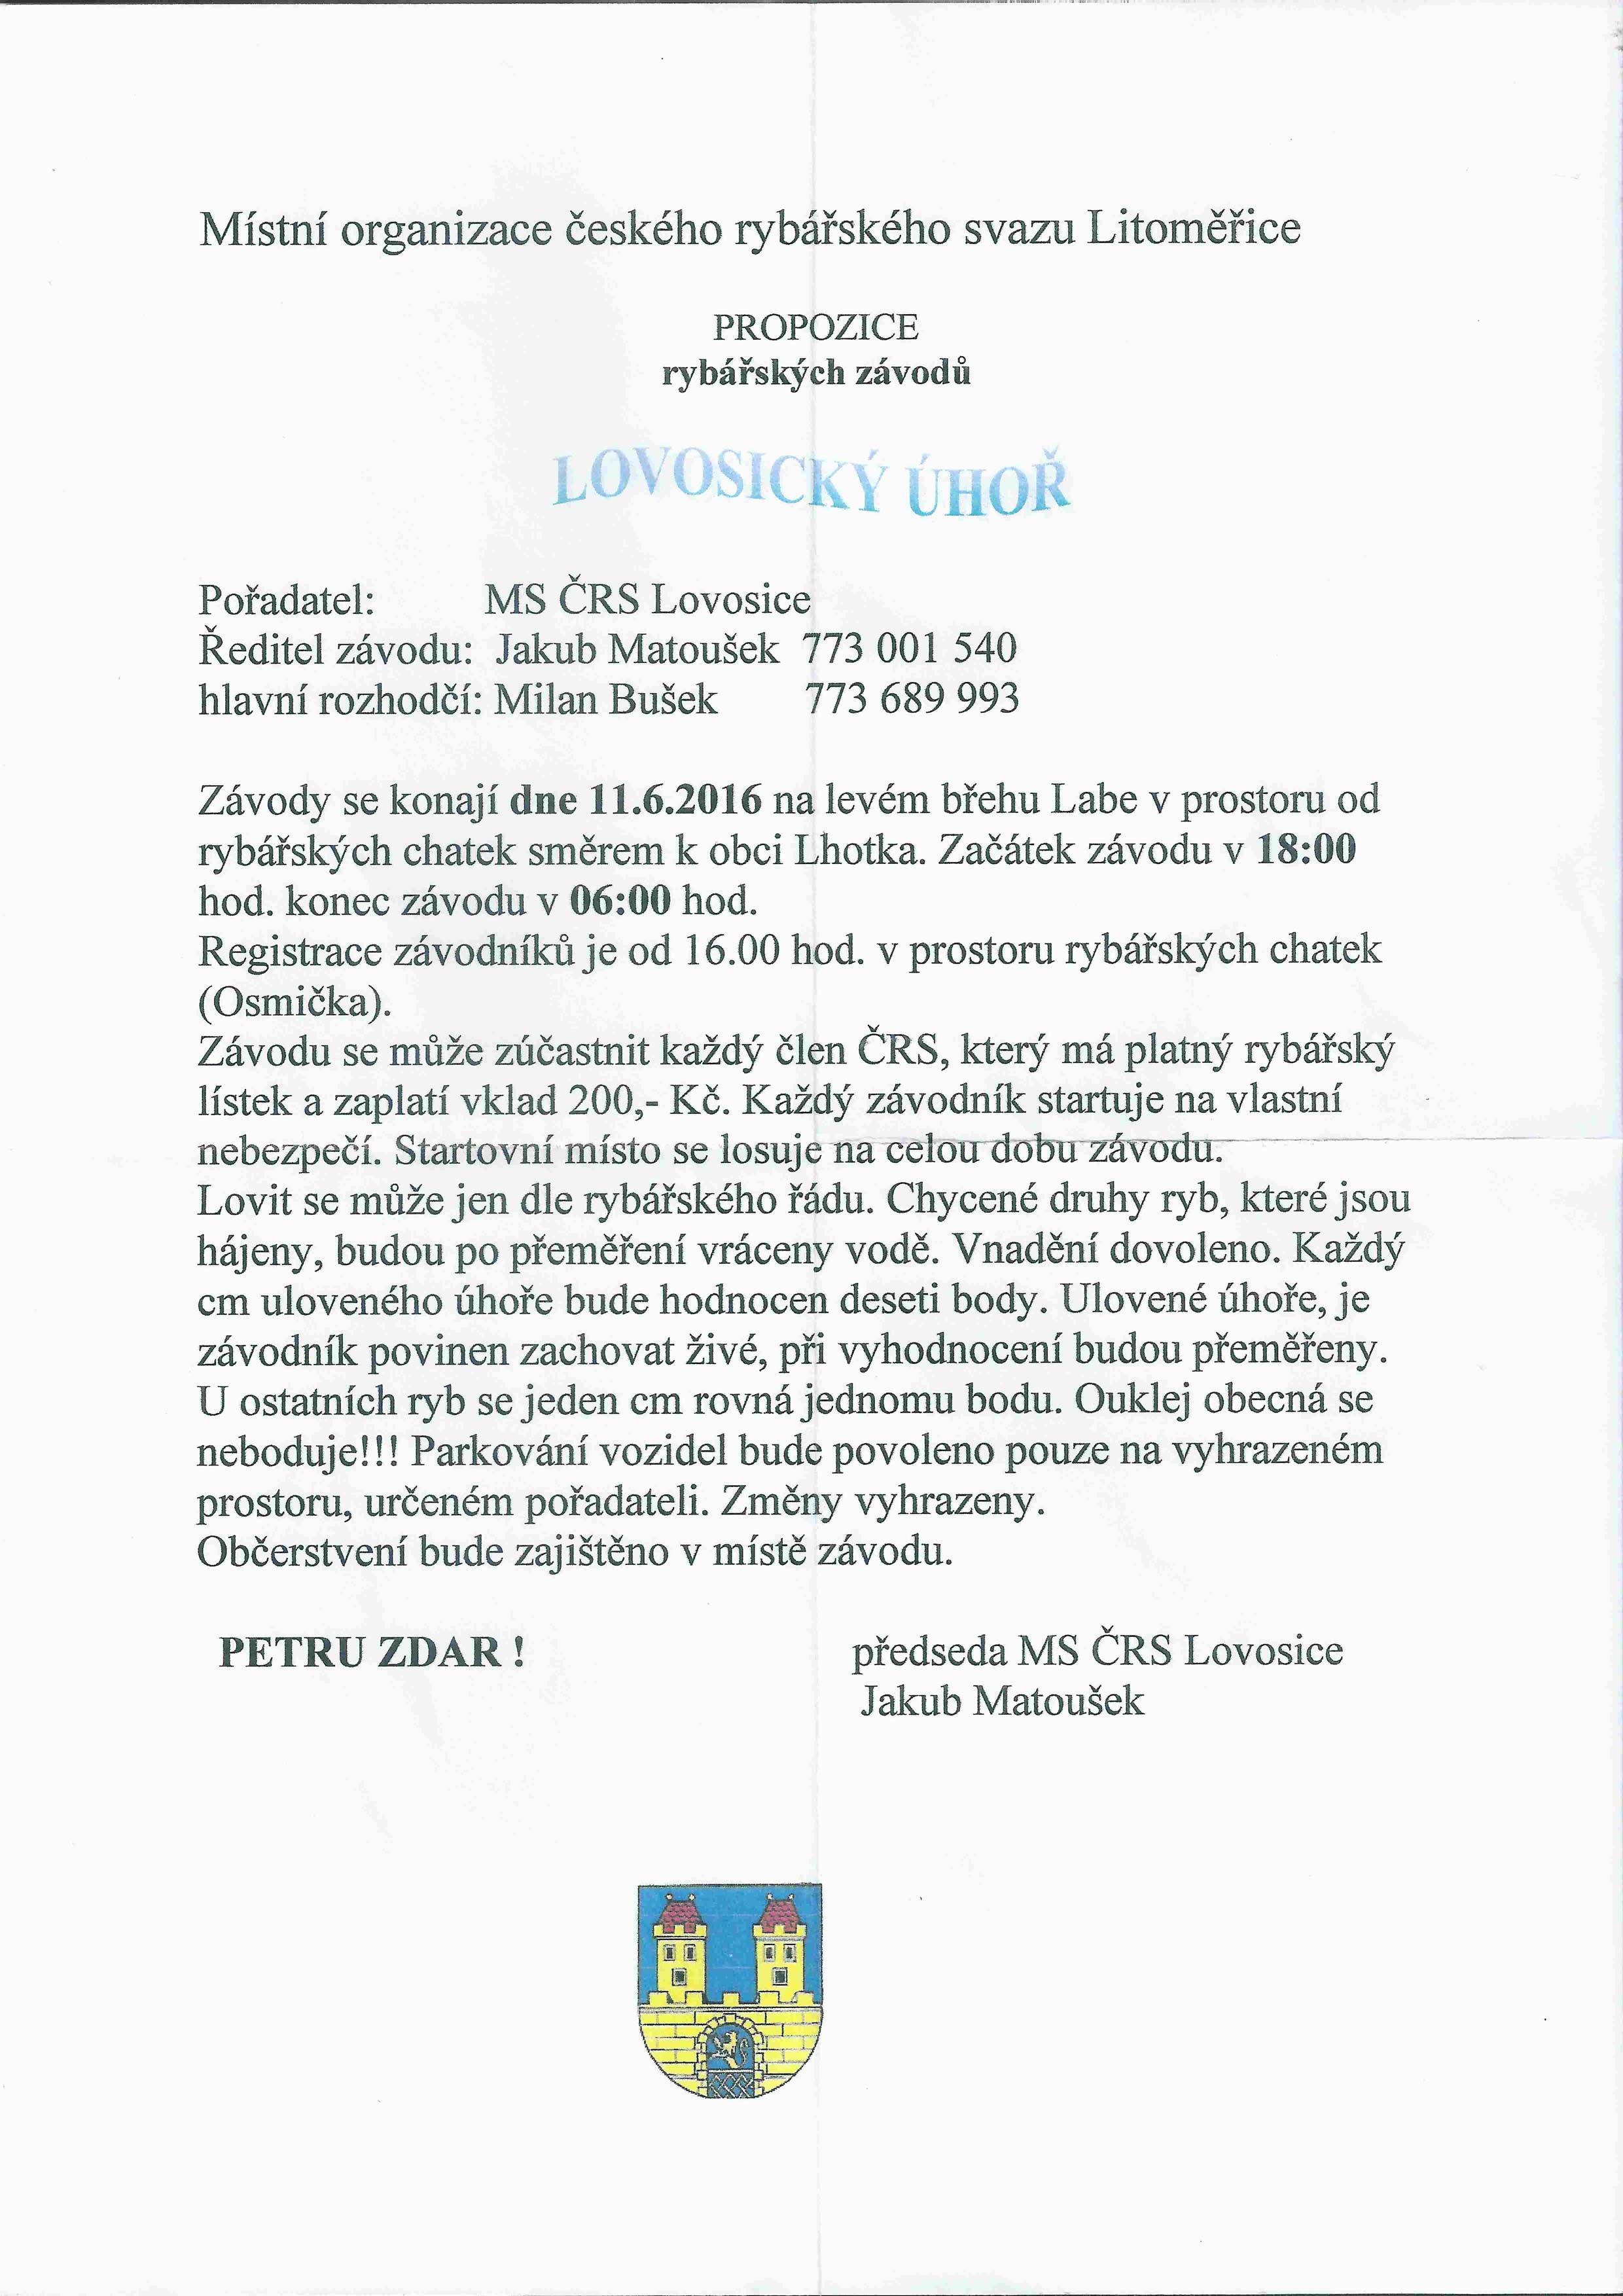 Lovosicky uhor